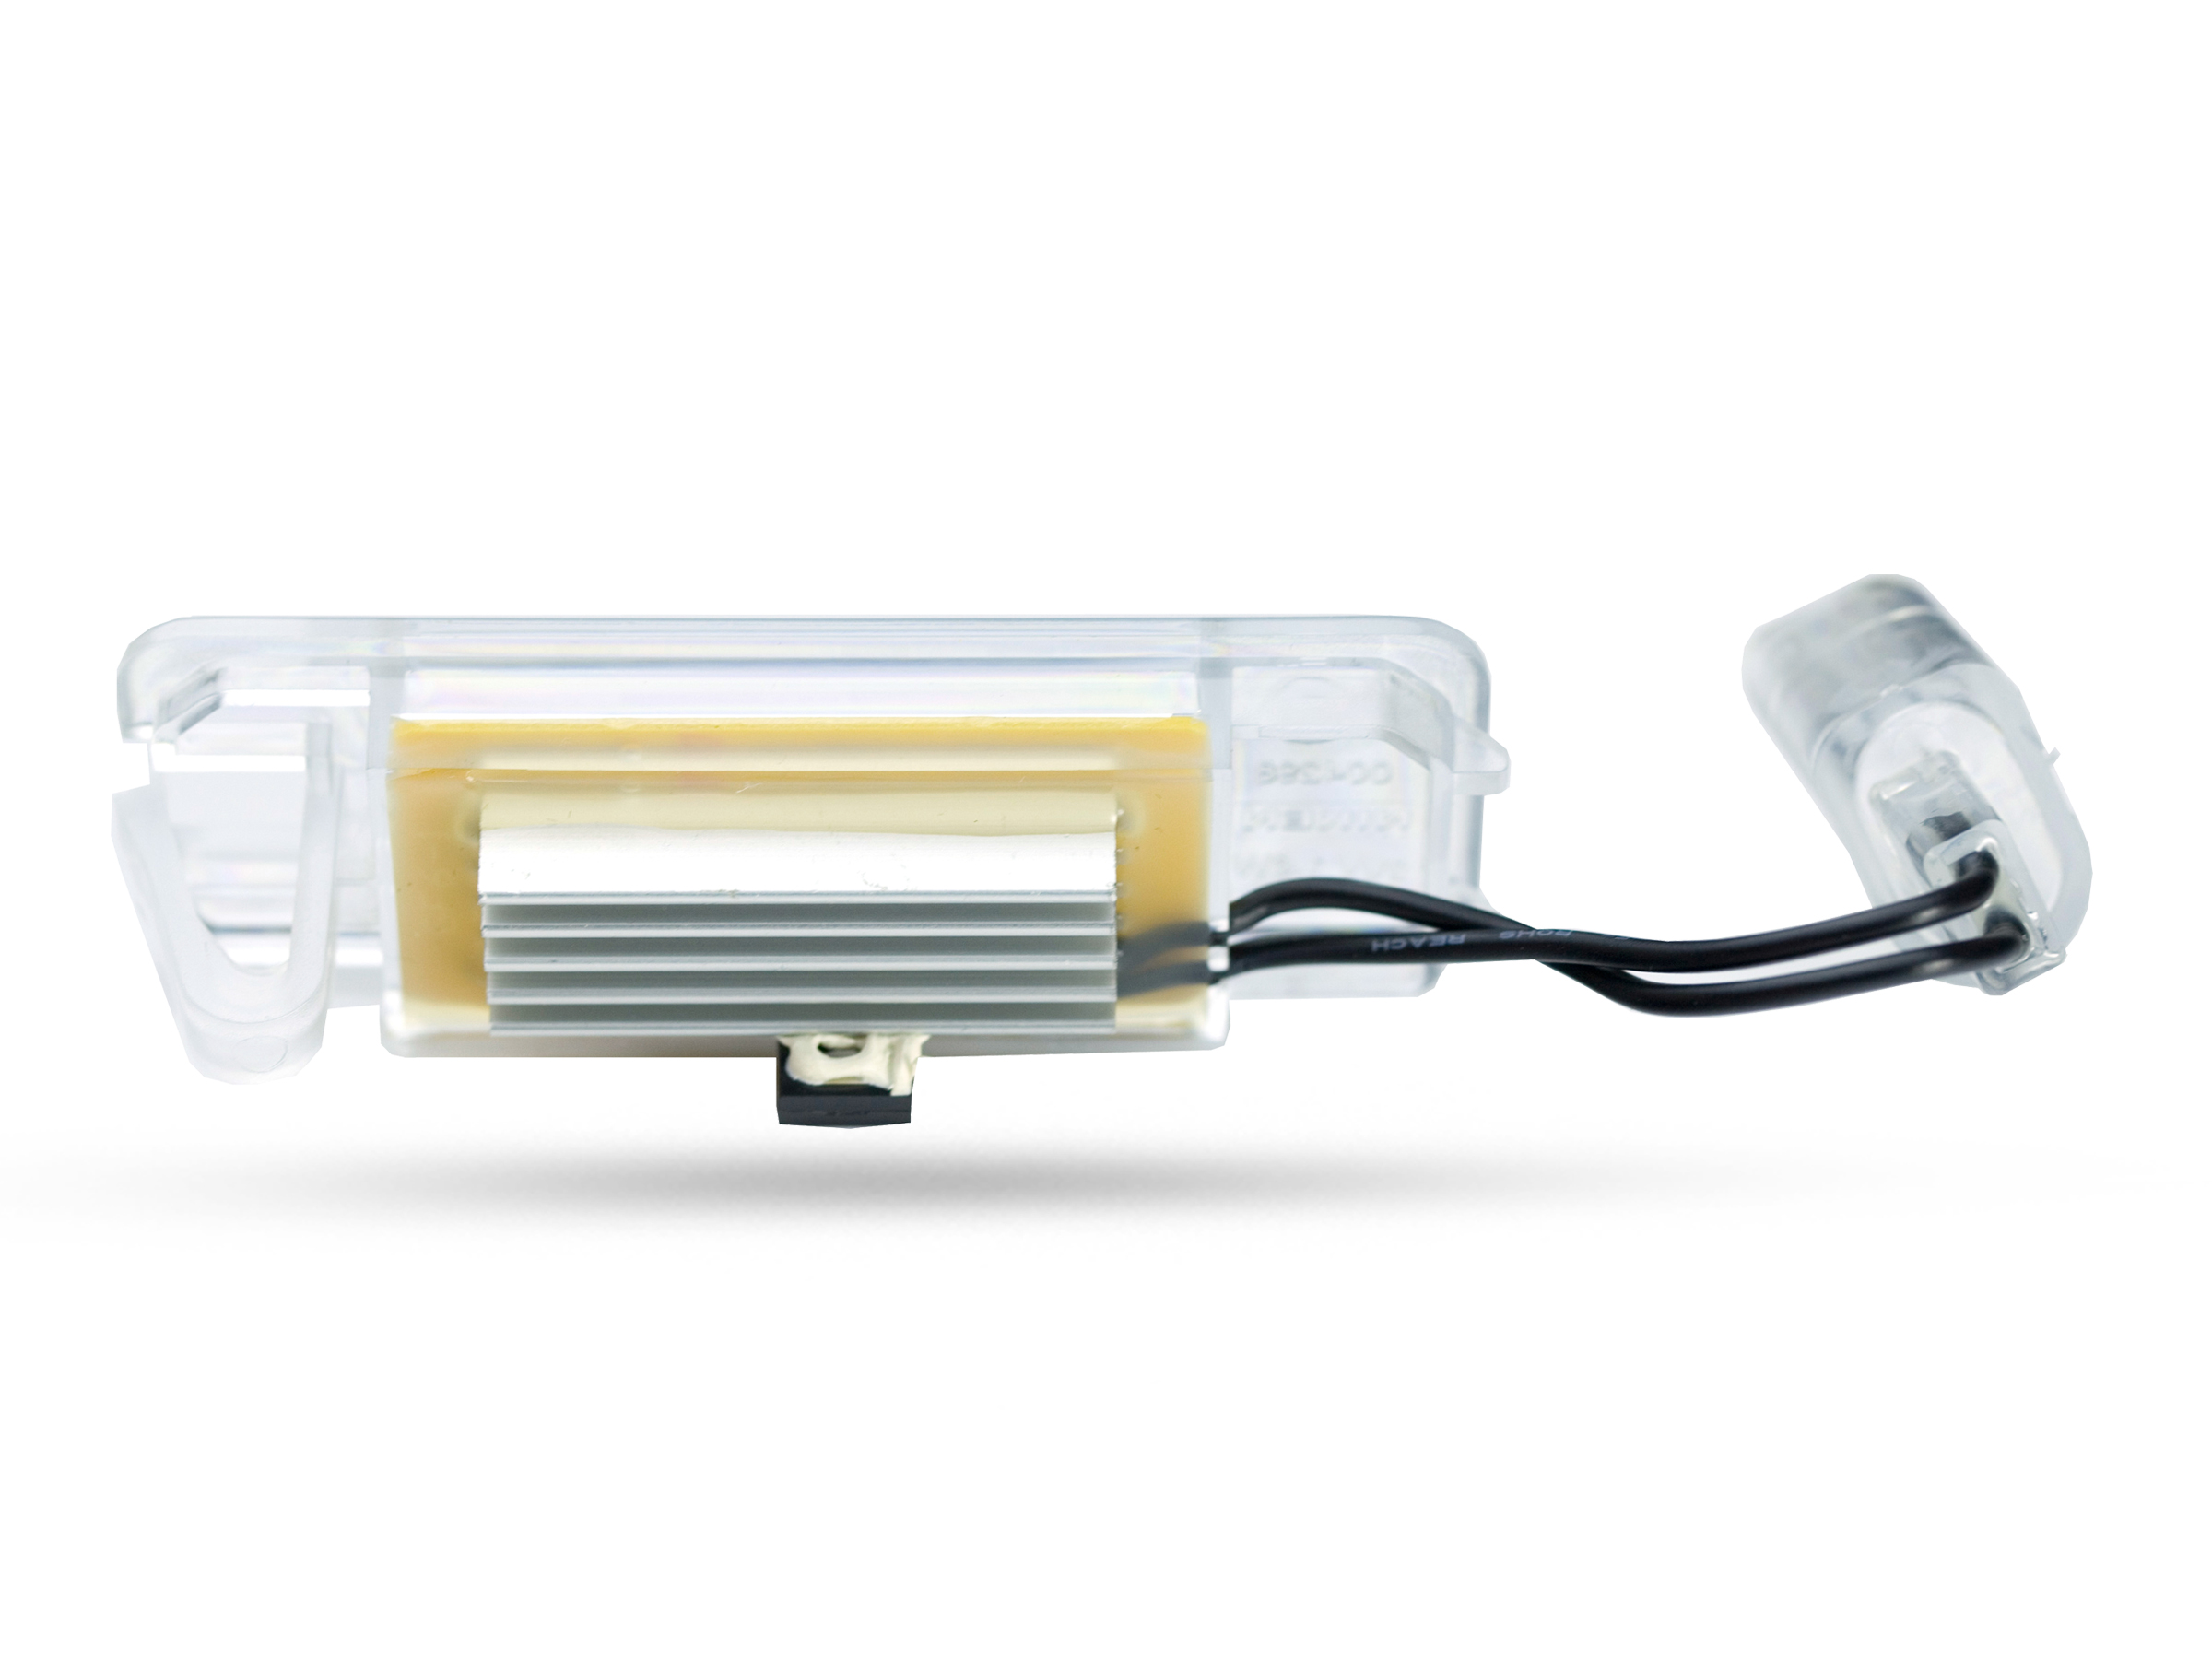 LED Kennzeichenbeleuchtung Module VW Golf 4 IV, mit E-Prüfzeichen, LED  Kennzeichenbeleuchtung für VW, LED Kennzeichenbeleuchtung